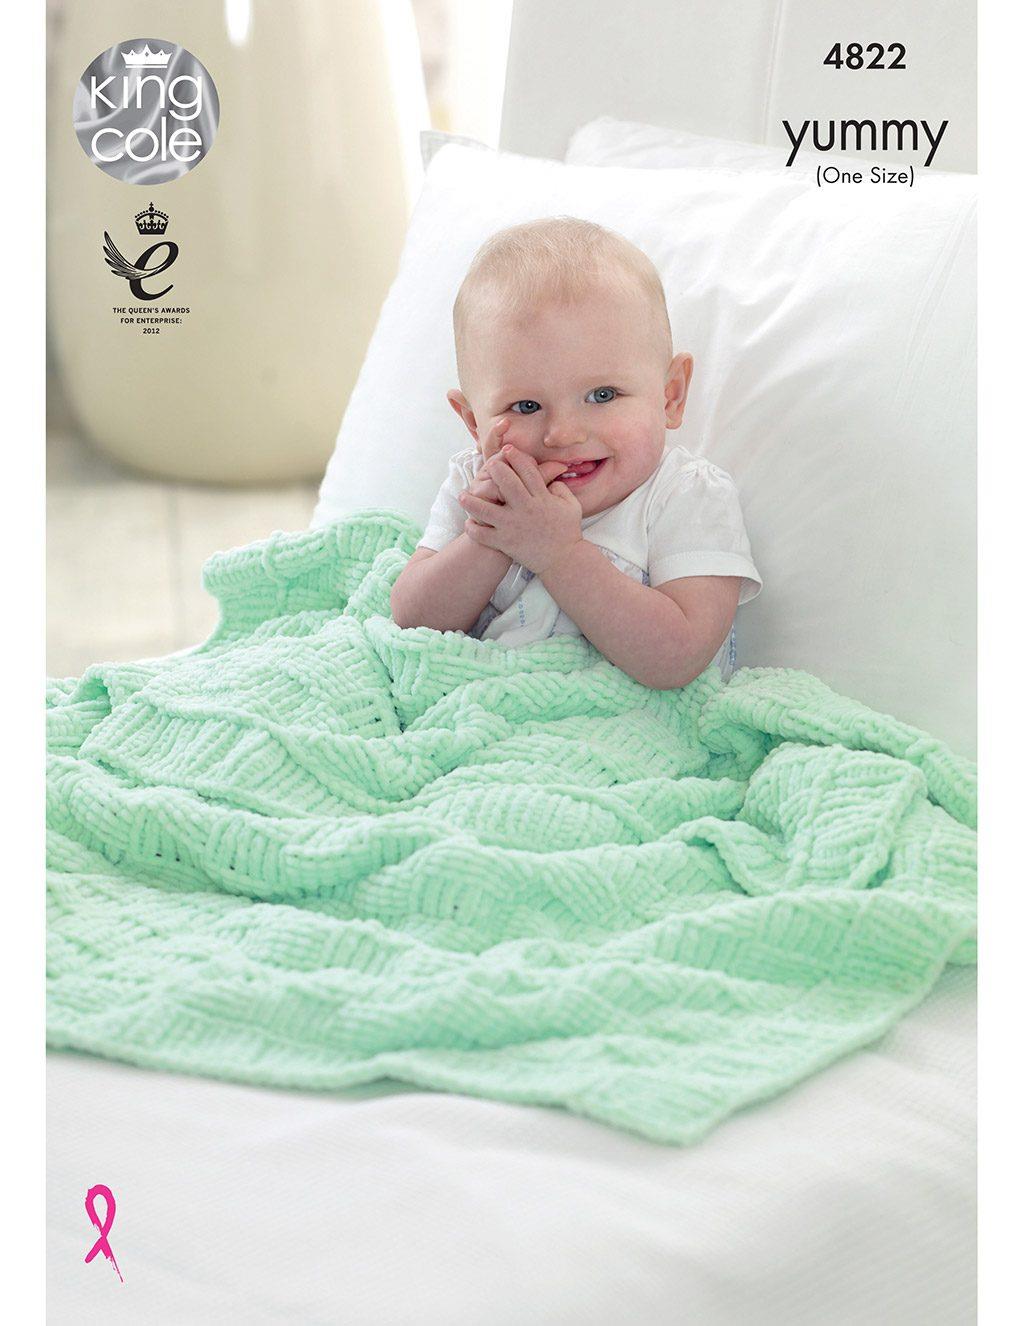 King Cole Yummy knitting pattern (4822) blankets